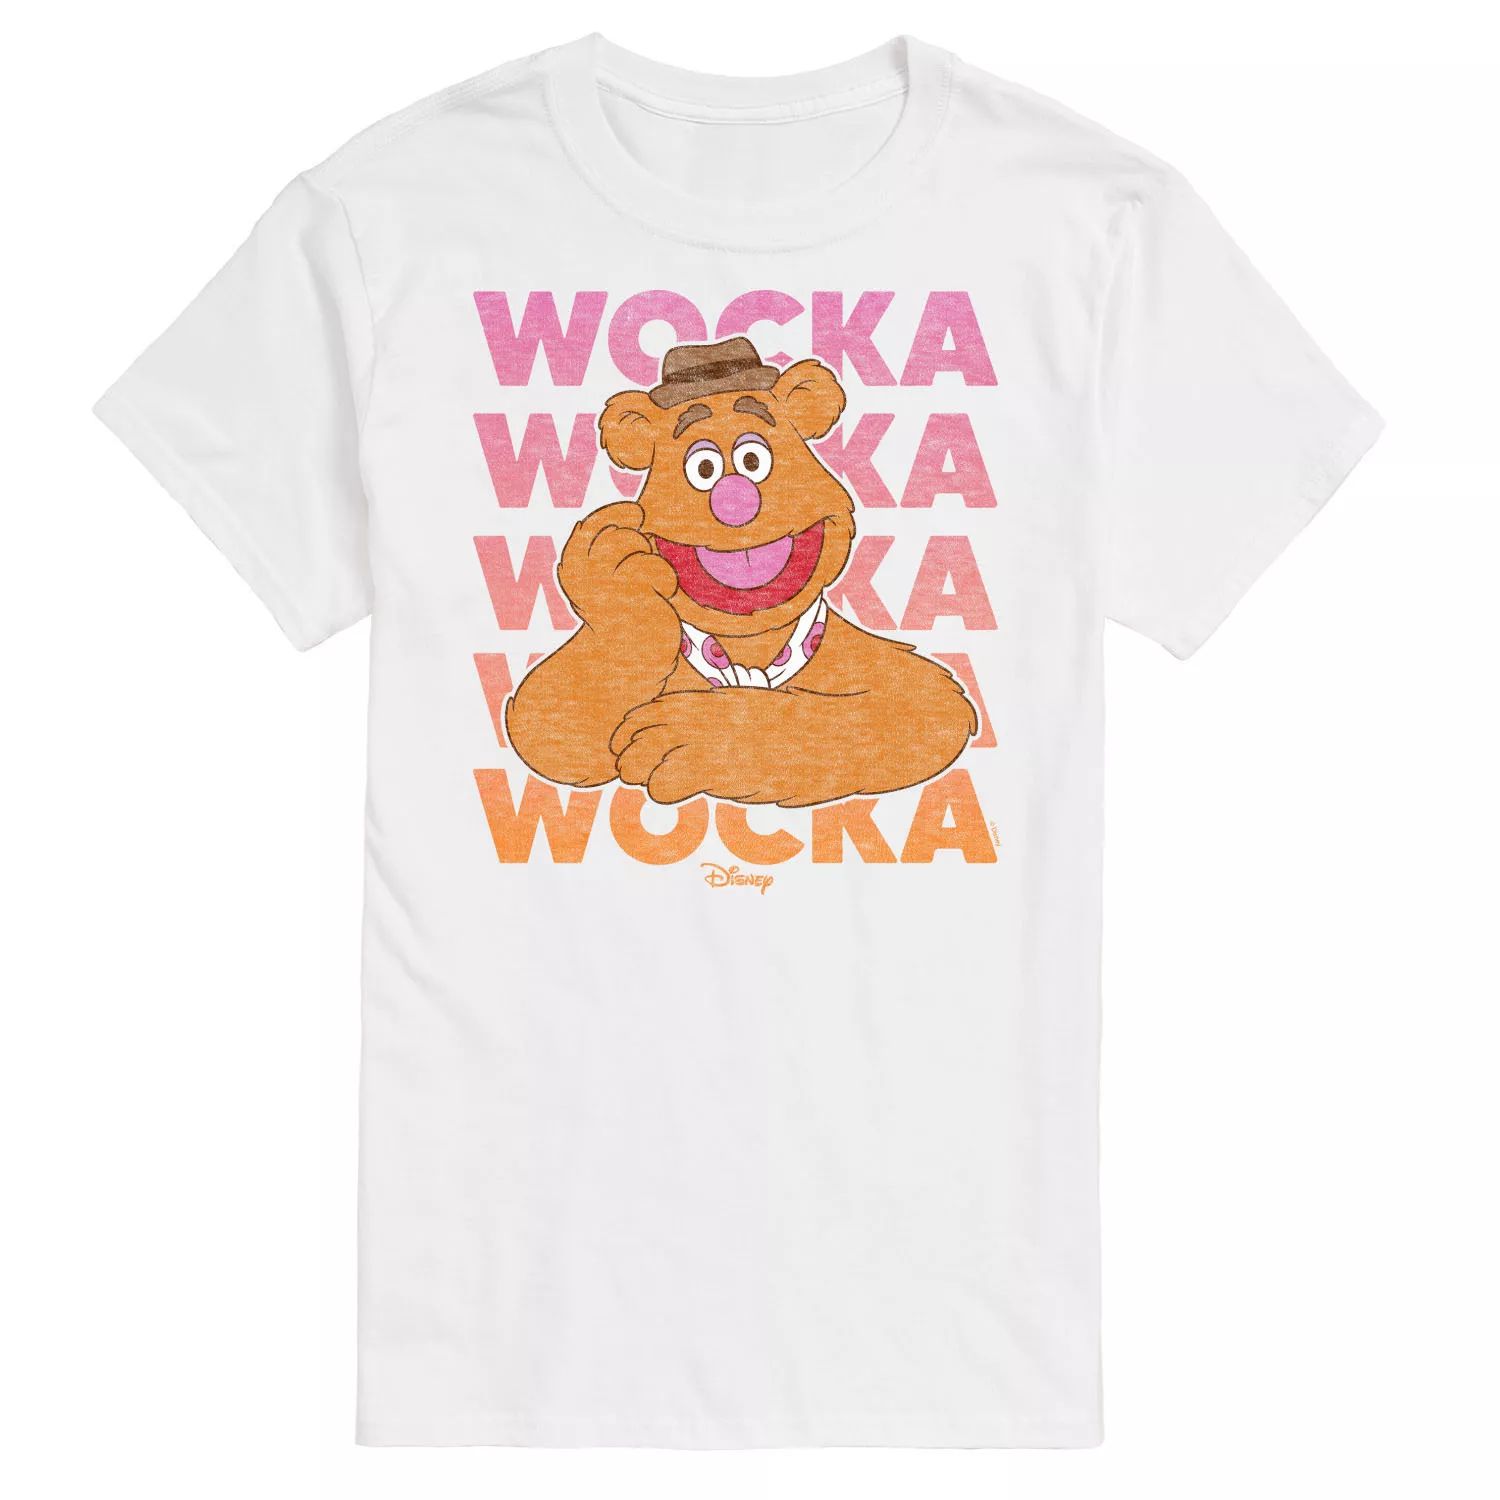 Мужская футболка Disney's The Muppets Wocka Wocka Licensed Character, белый